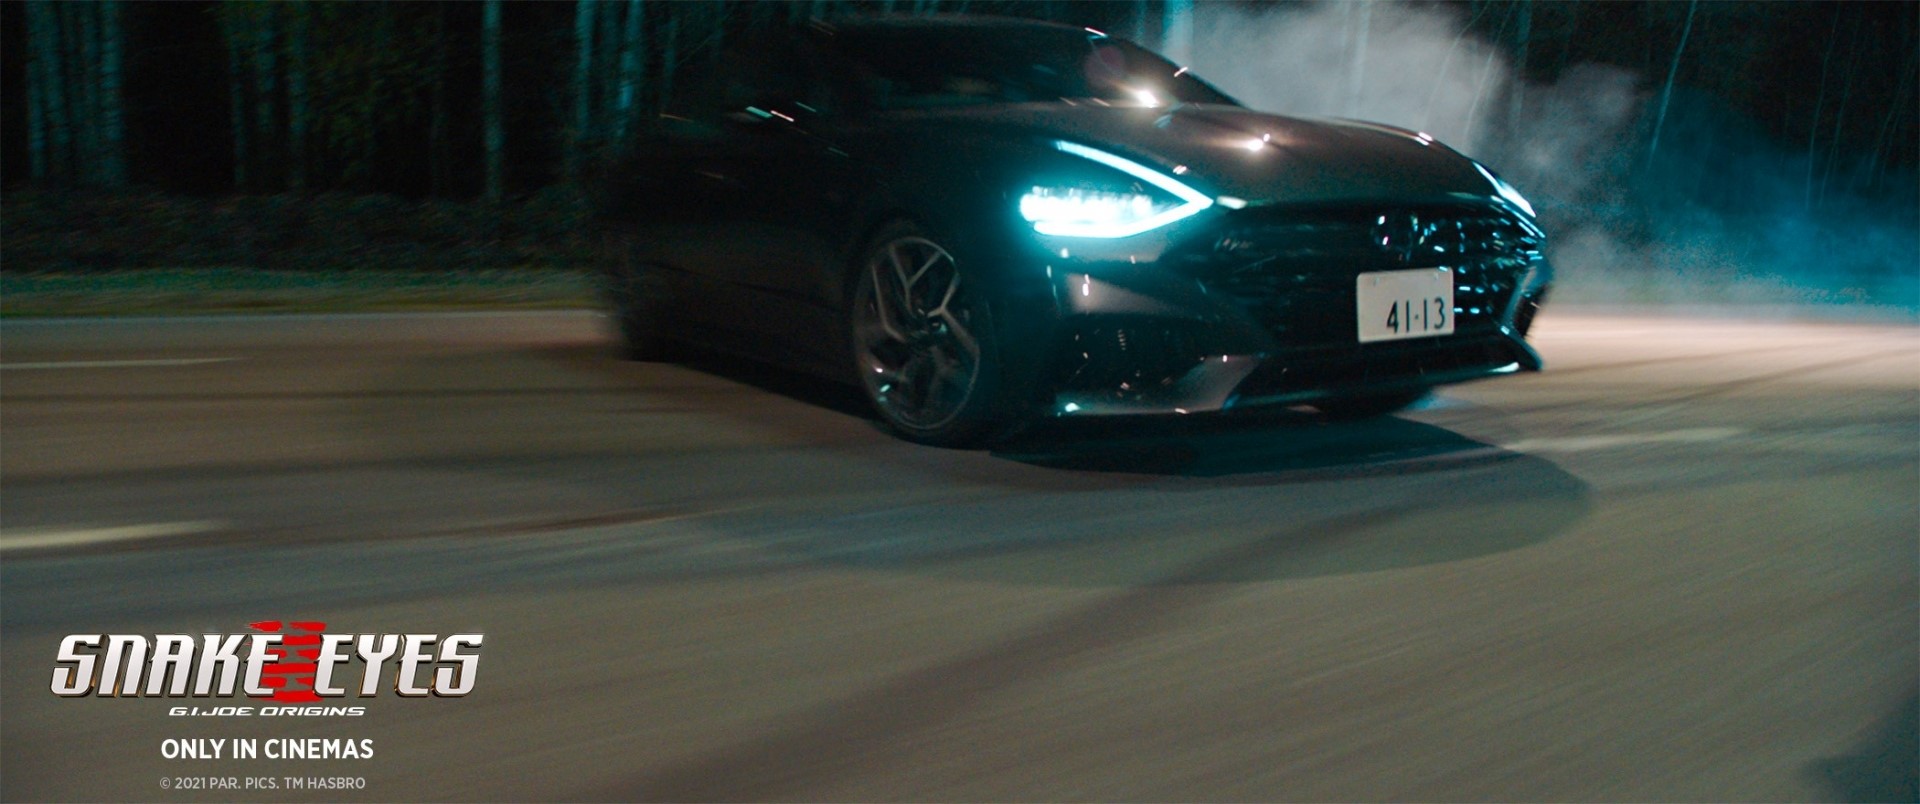 Hyundai Motor показала тизер модели Sonata N Line в фильме «G.I. Joe. Бросок Кобры: Снейк Айз» 